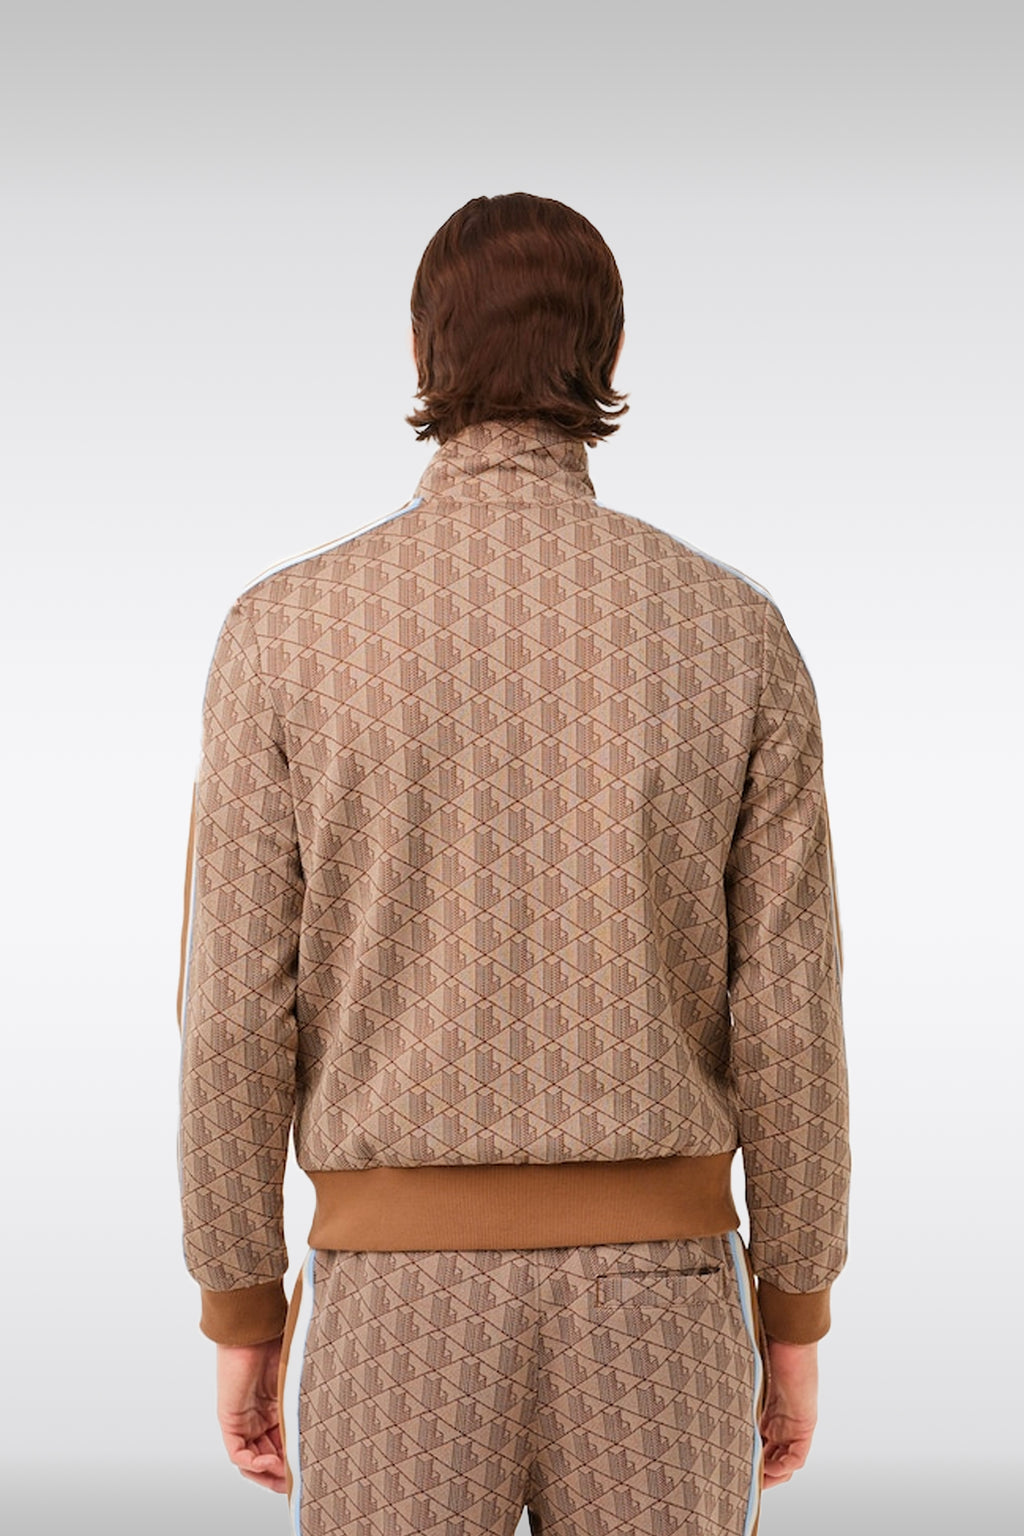 alt-image__Beige-and-brown-sport-jacket-with-jacquard-motif-